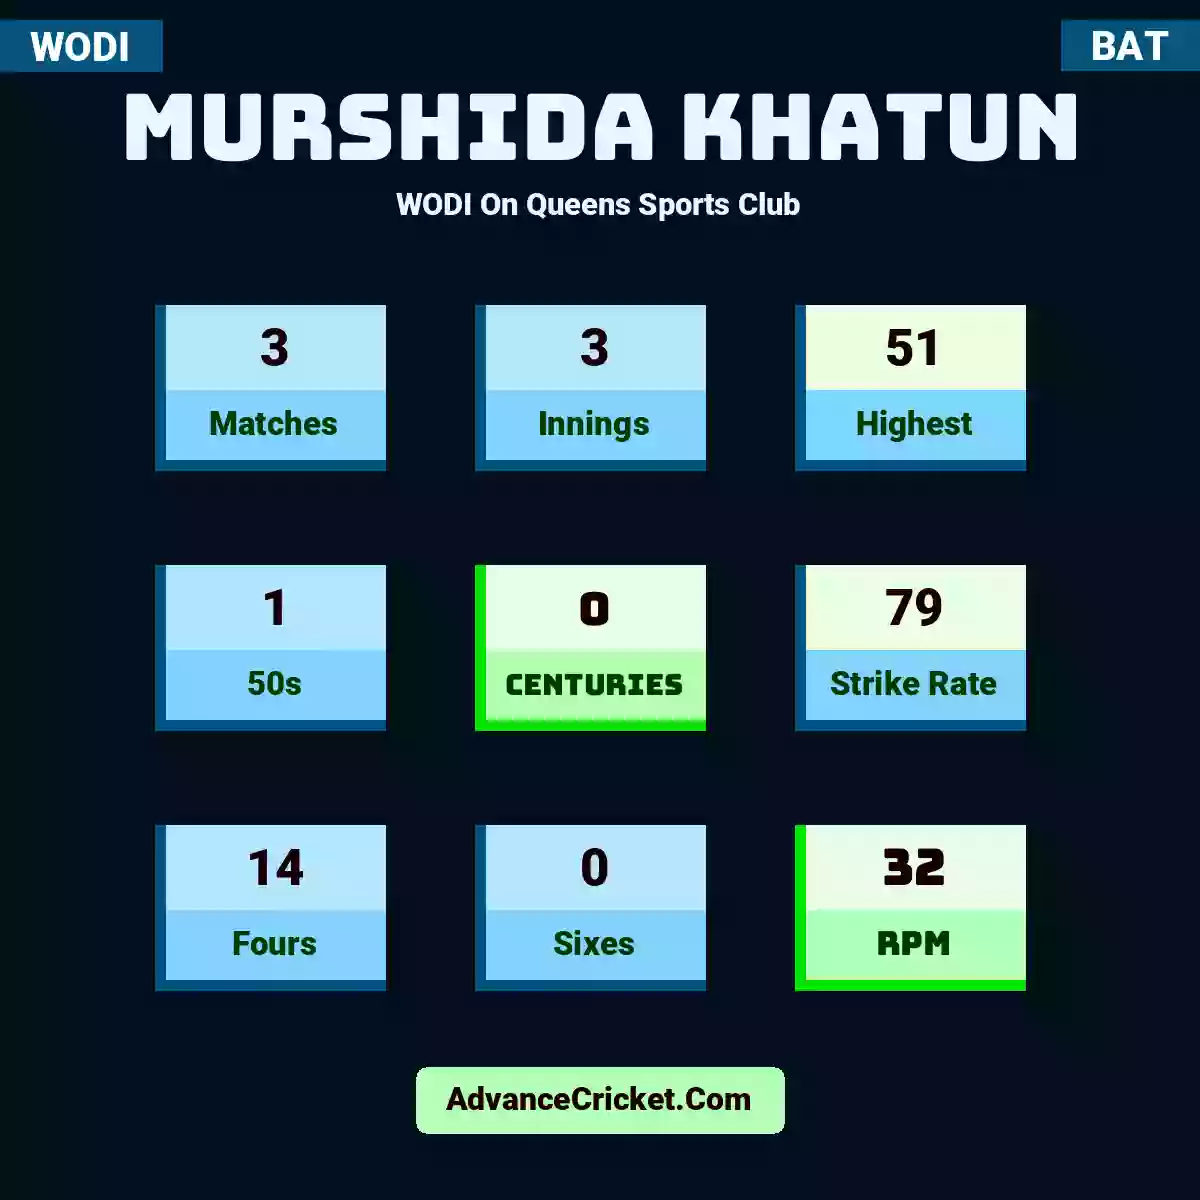 Murshida Khatun WODI  On Queens Sports Club, Murshida Khatun played 3 matches, scored 51 runs as highest, 1 half-centuries, and 0 centuries, with a strike rate of 79. M.Khatun hit 14 fours and 0 sixes, with an RPM of 32.